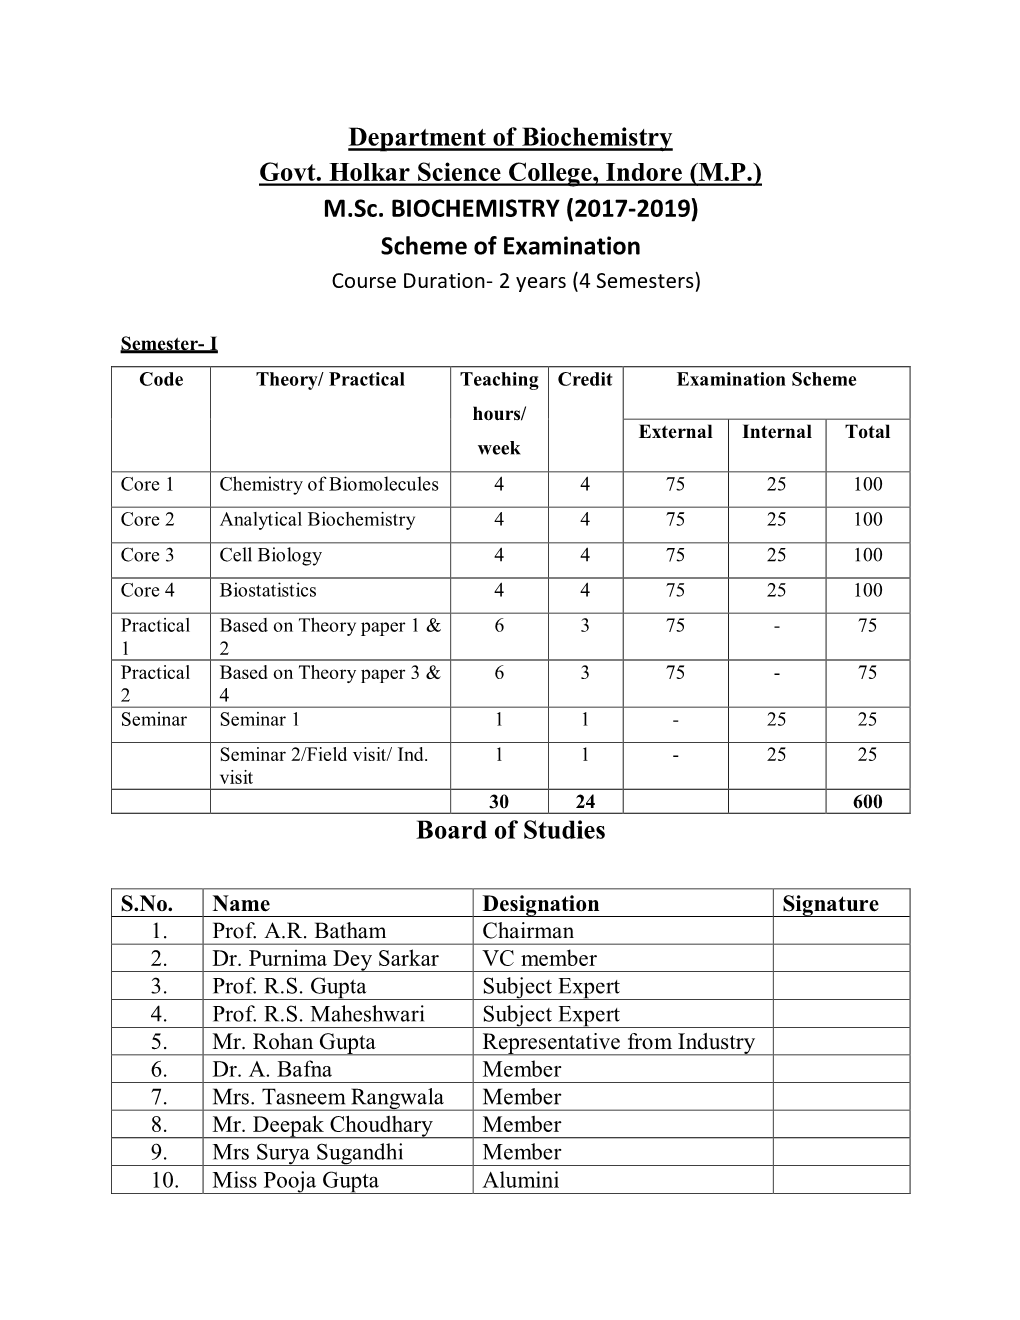 Department of Biochemistry Govt. Holkar Science College, Indore (M.P.) M.Sc. BIOCHEMISTRY (2017-2019) Scheme of Examination Boar